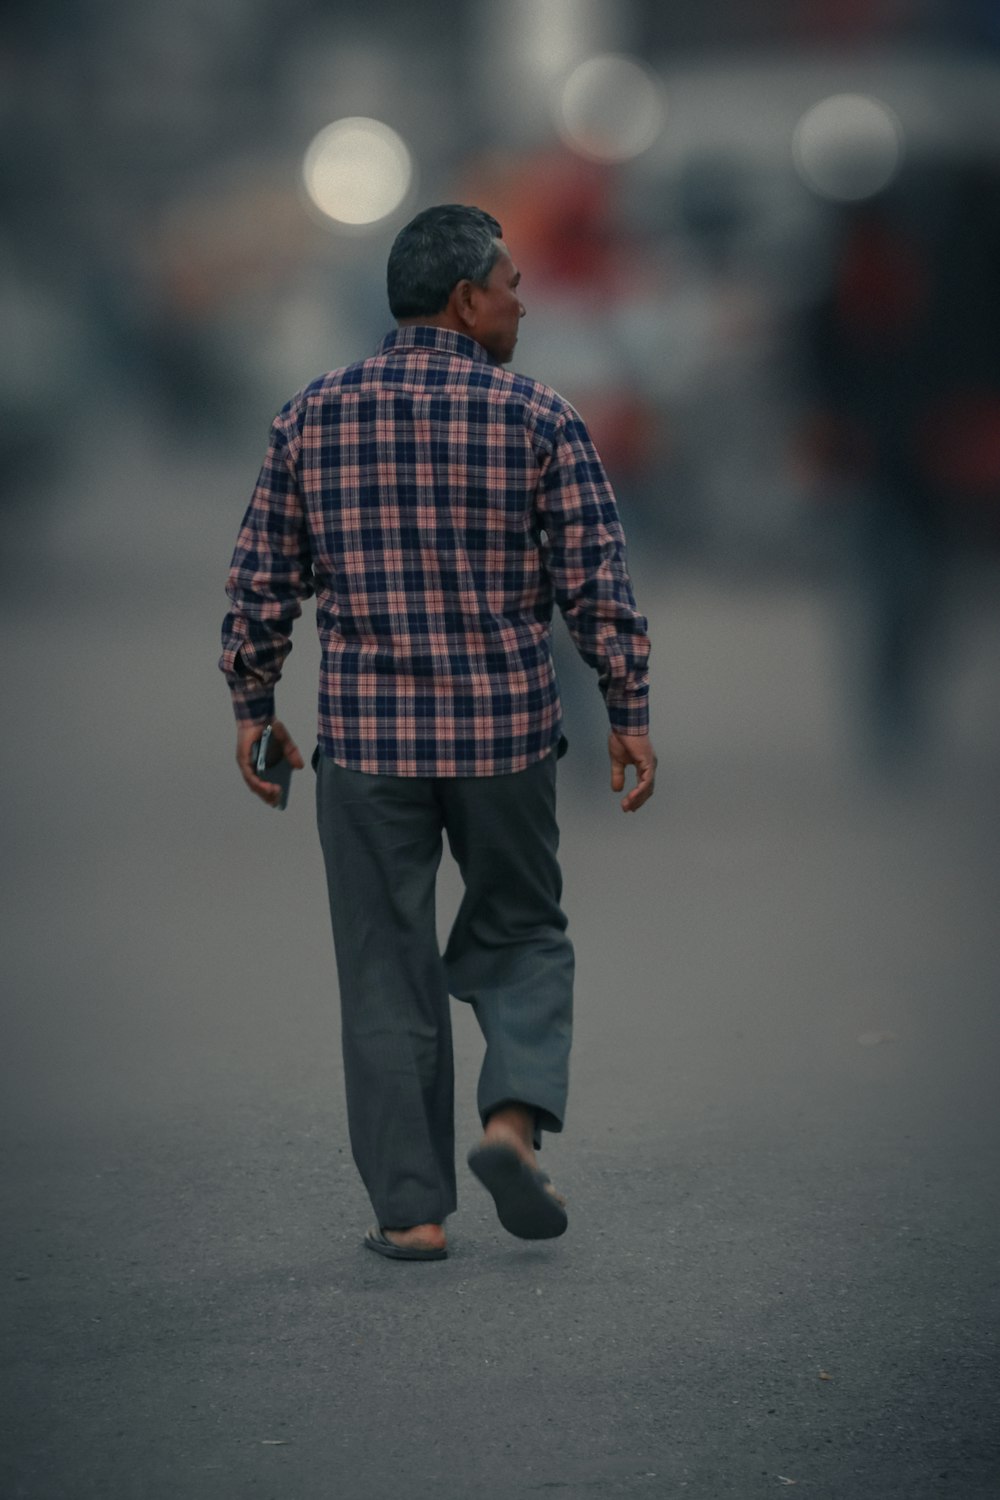 a man walking on a road